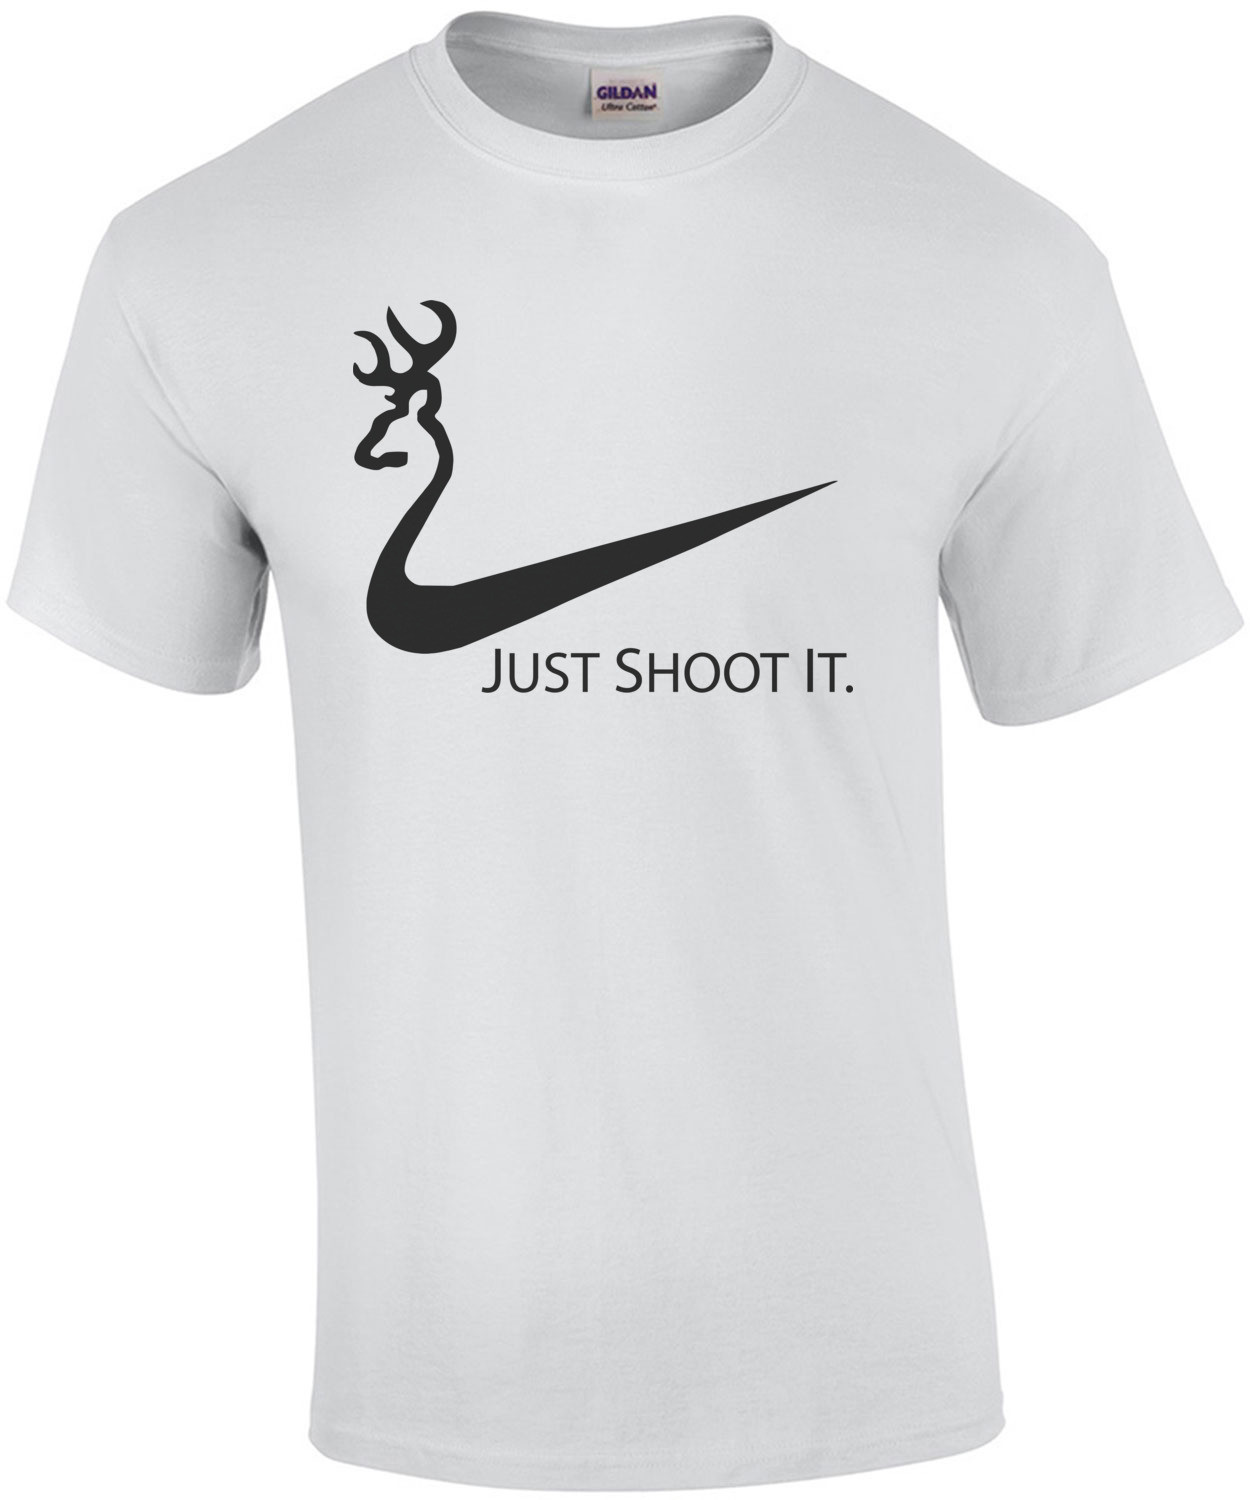 Just Shoot It T-Shirt